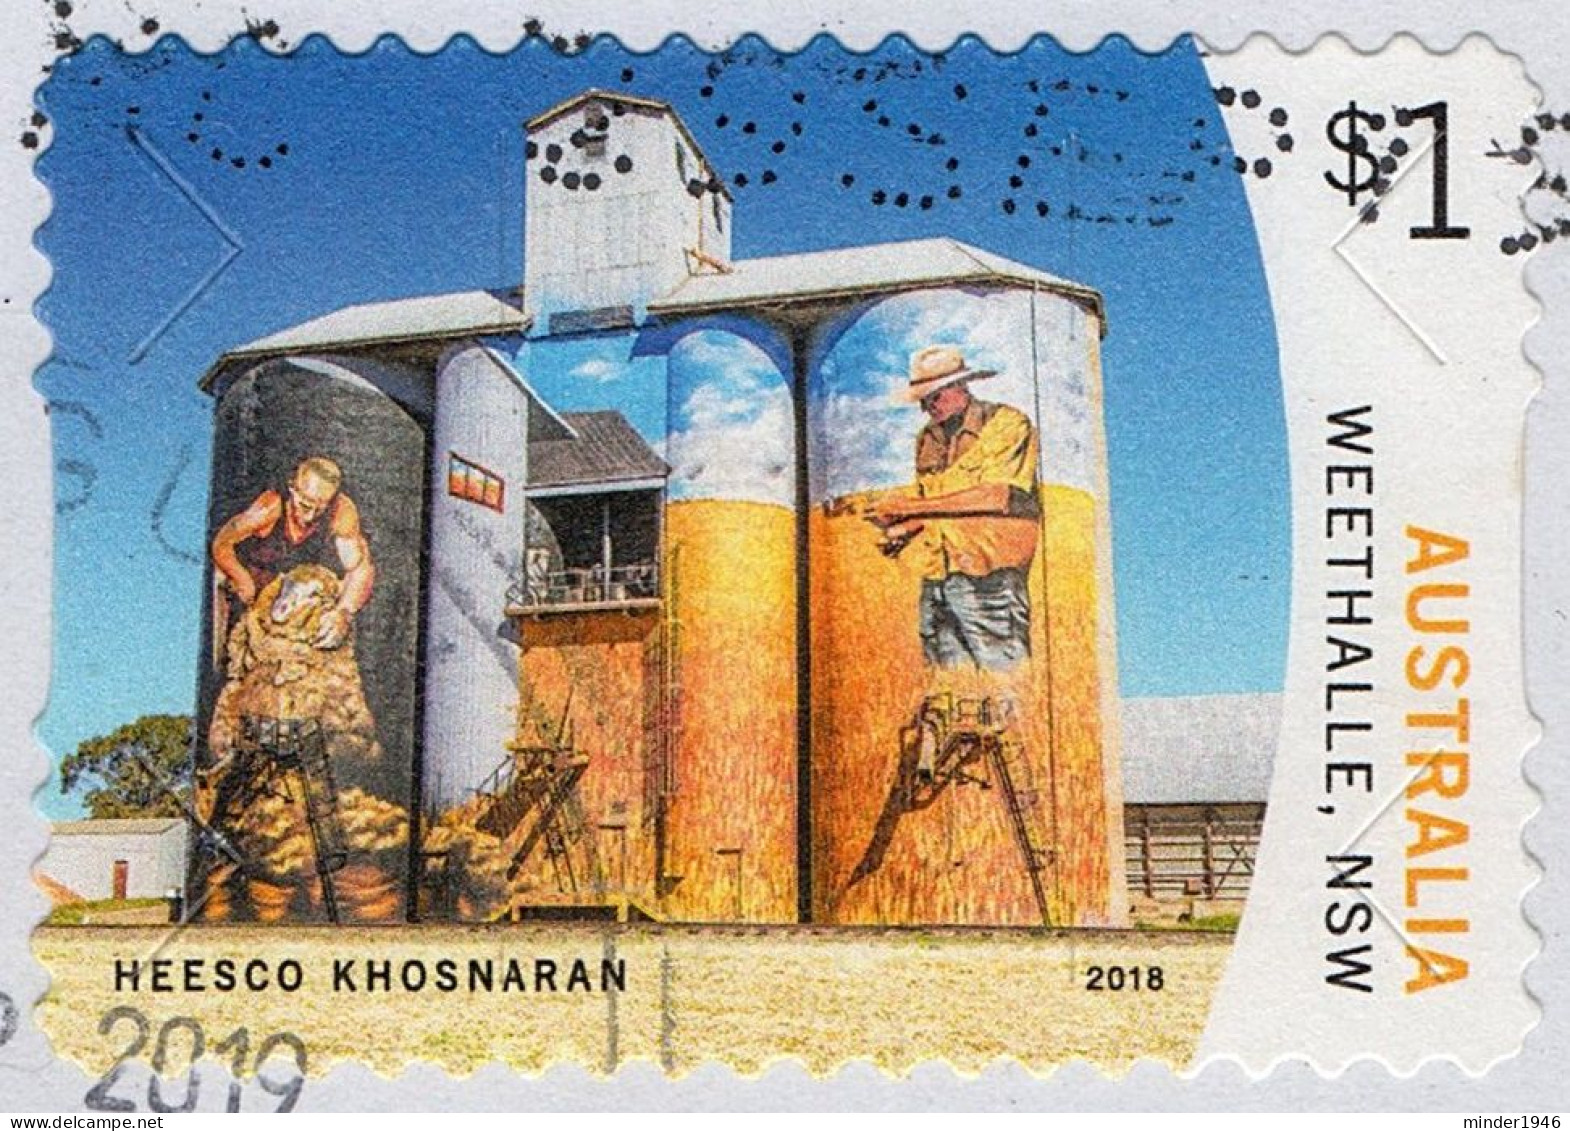 AUSTRALIA 2018 $1 Multicoloured, Silo Art-Heesco Khosnaran Weethalle, NSW Die-Cut Self Adhesive FU - Used Stamps